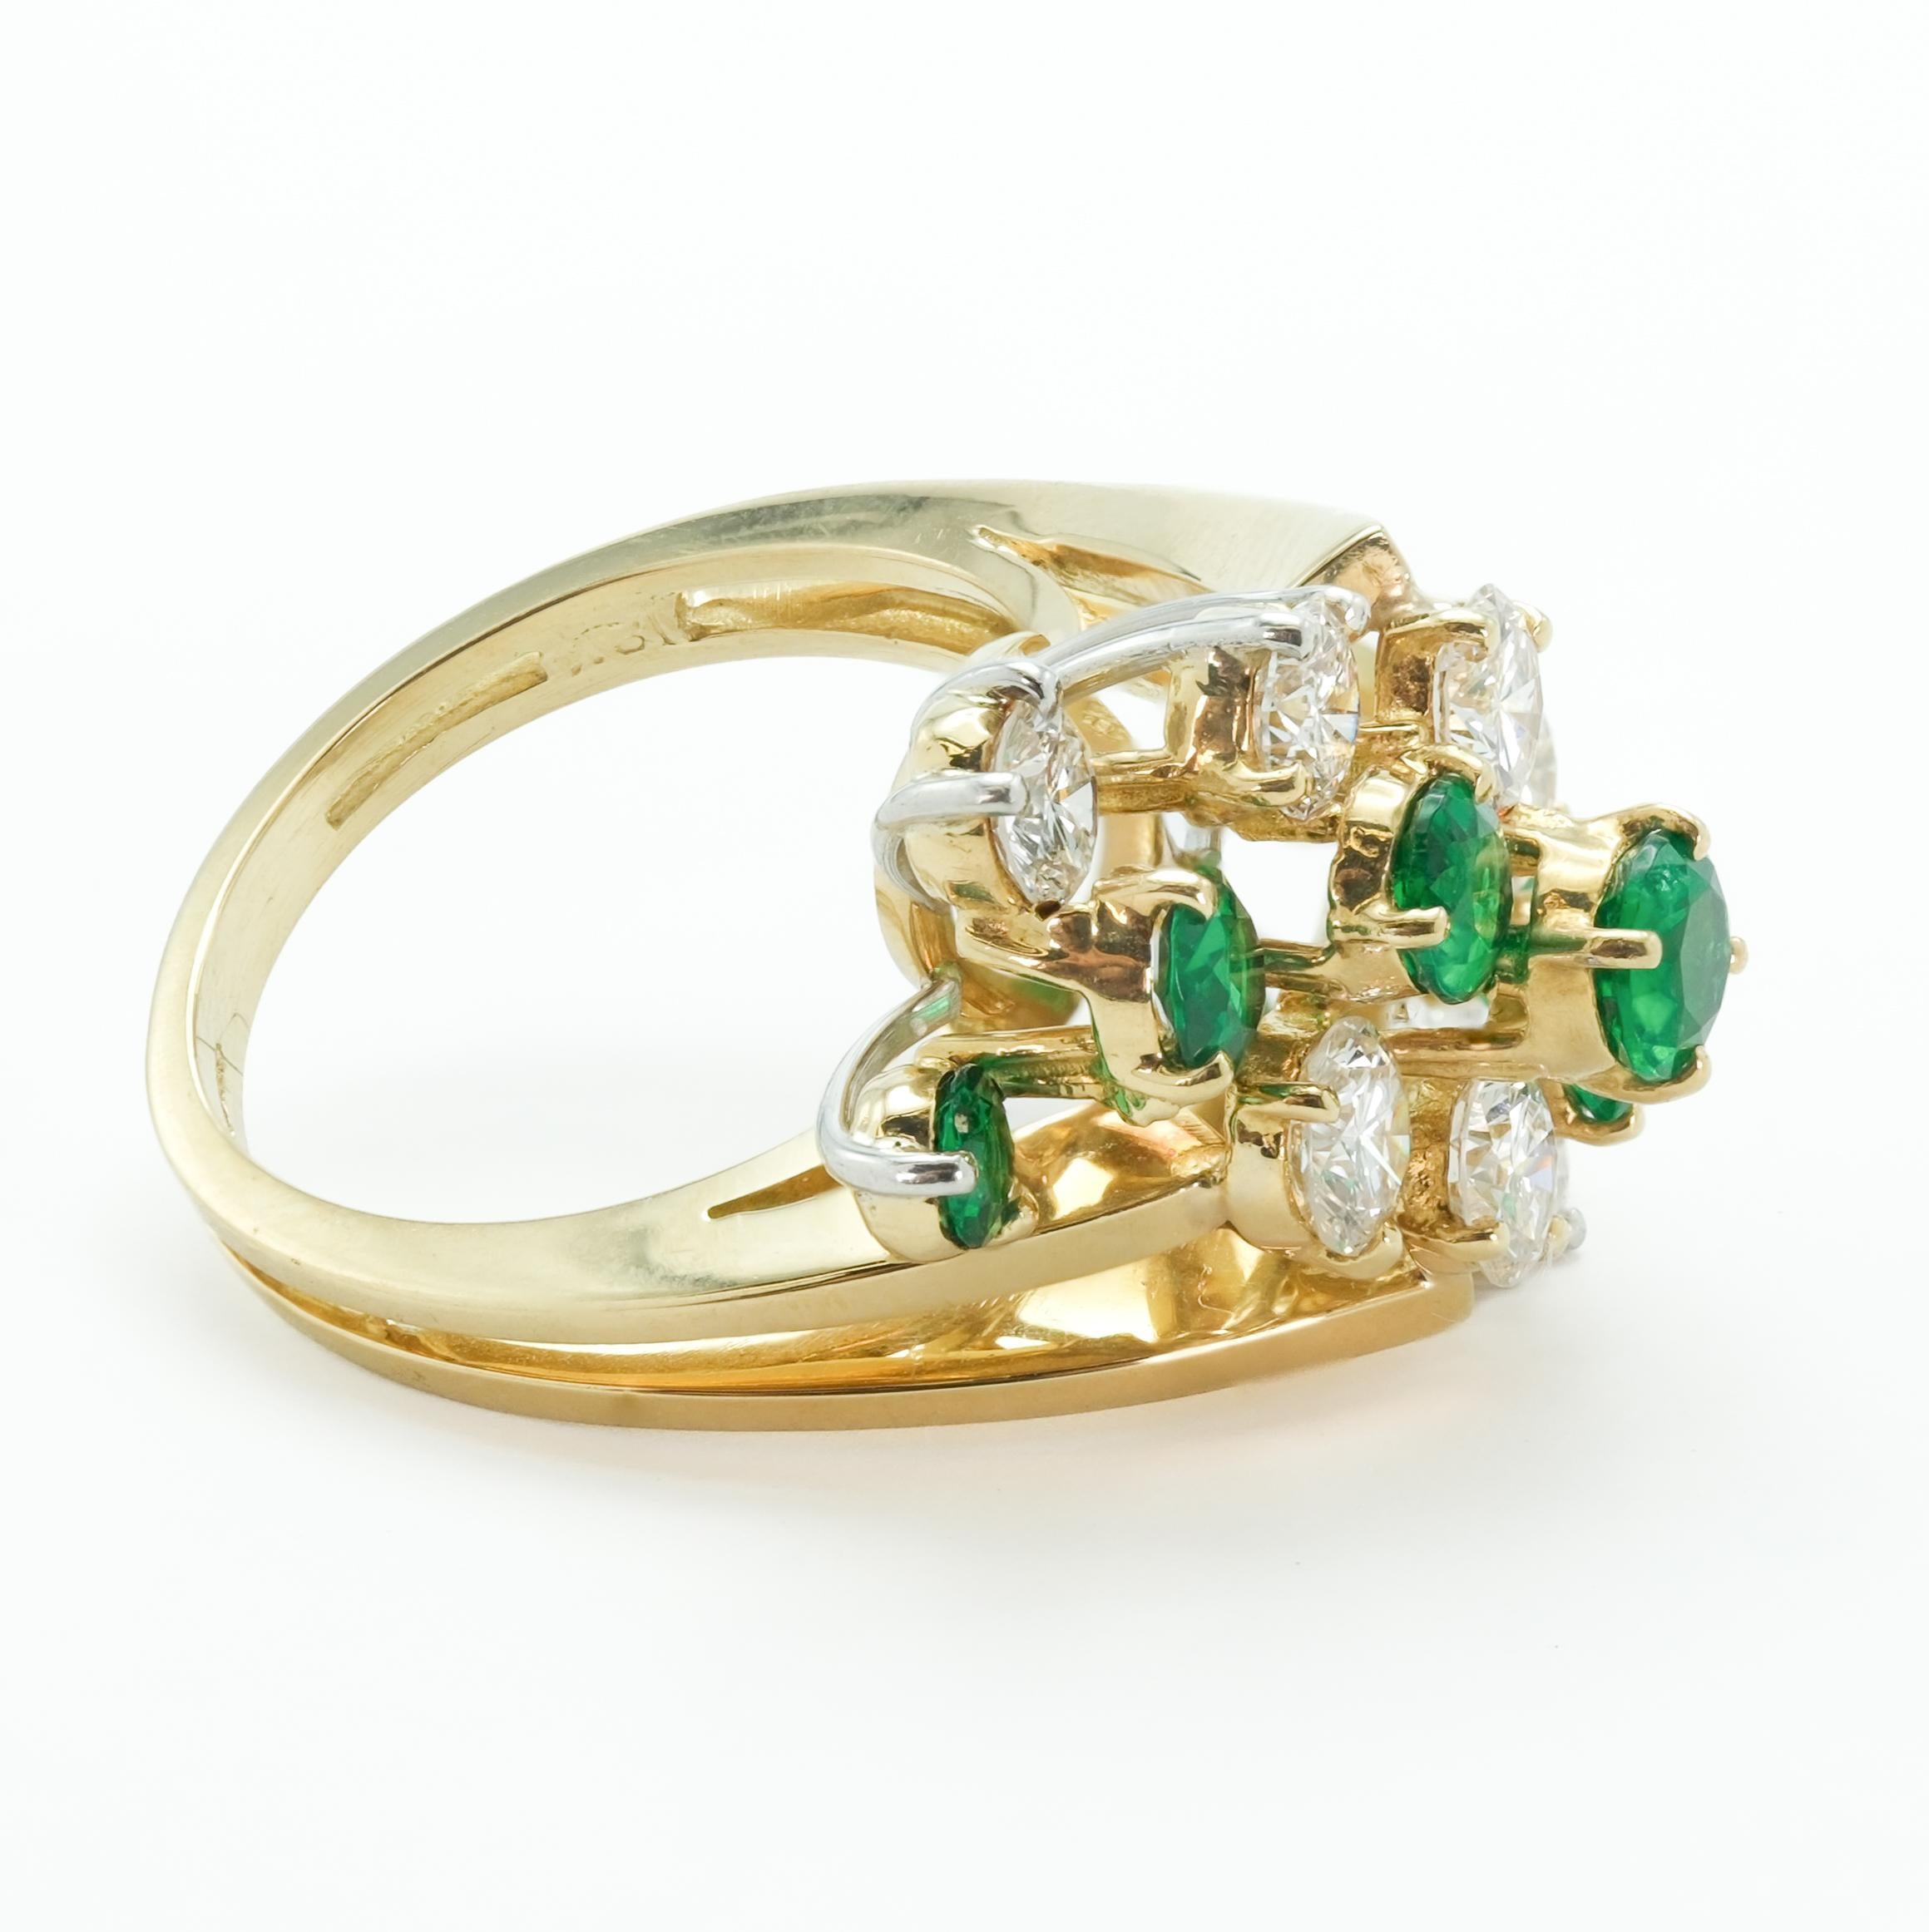 Modernist Moderist 18 Karat Kurt Wayne Ring with Emeralds and Diamonds For Sale